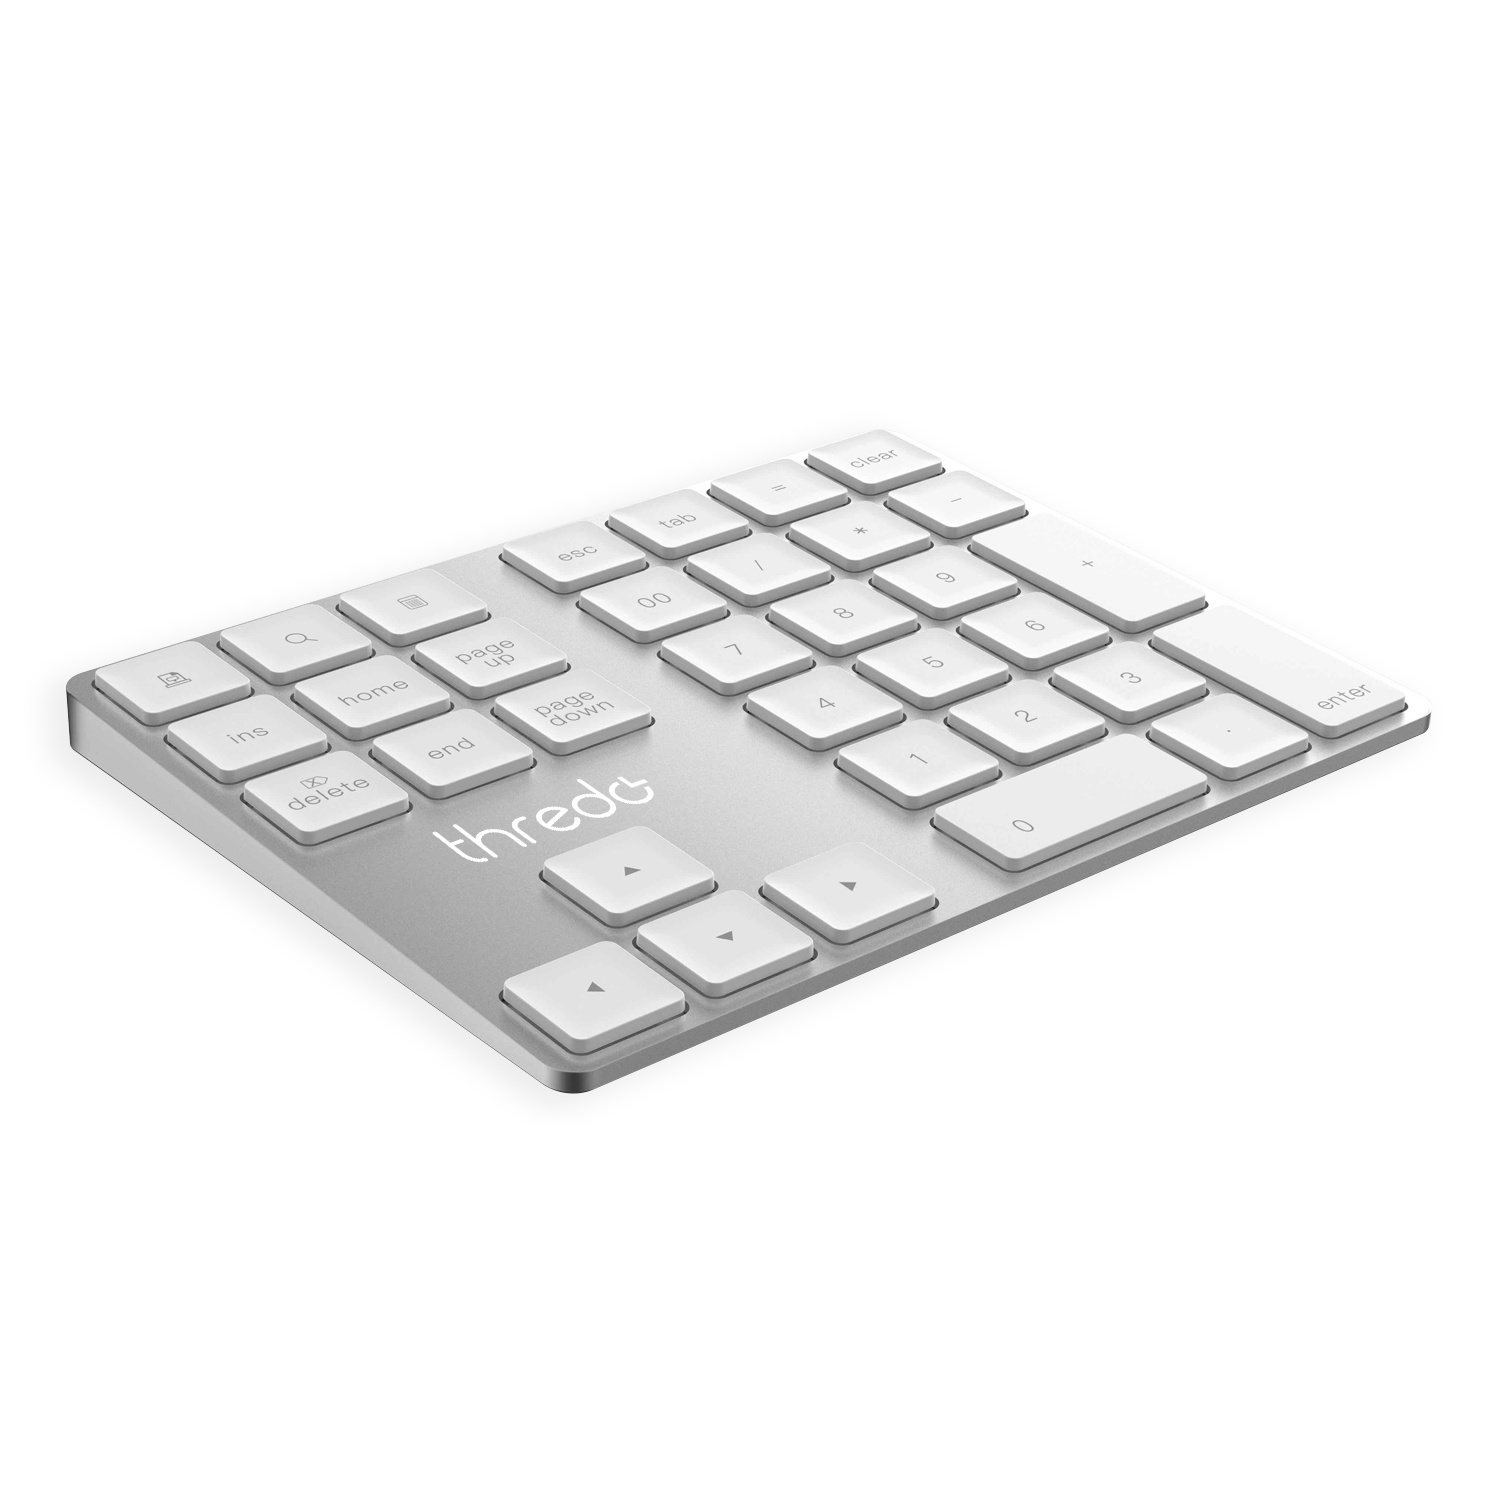 lood Jongleren dempen Thredo Bluetooth Numeriek Macbook Toetsenbord/Keypad/Klavier - Zilver  Aluminium - Draadloos - Thredo